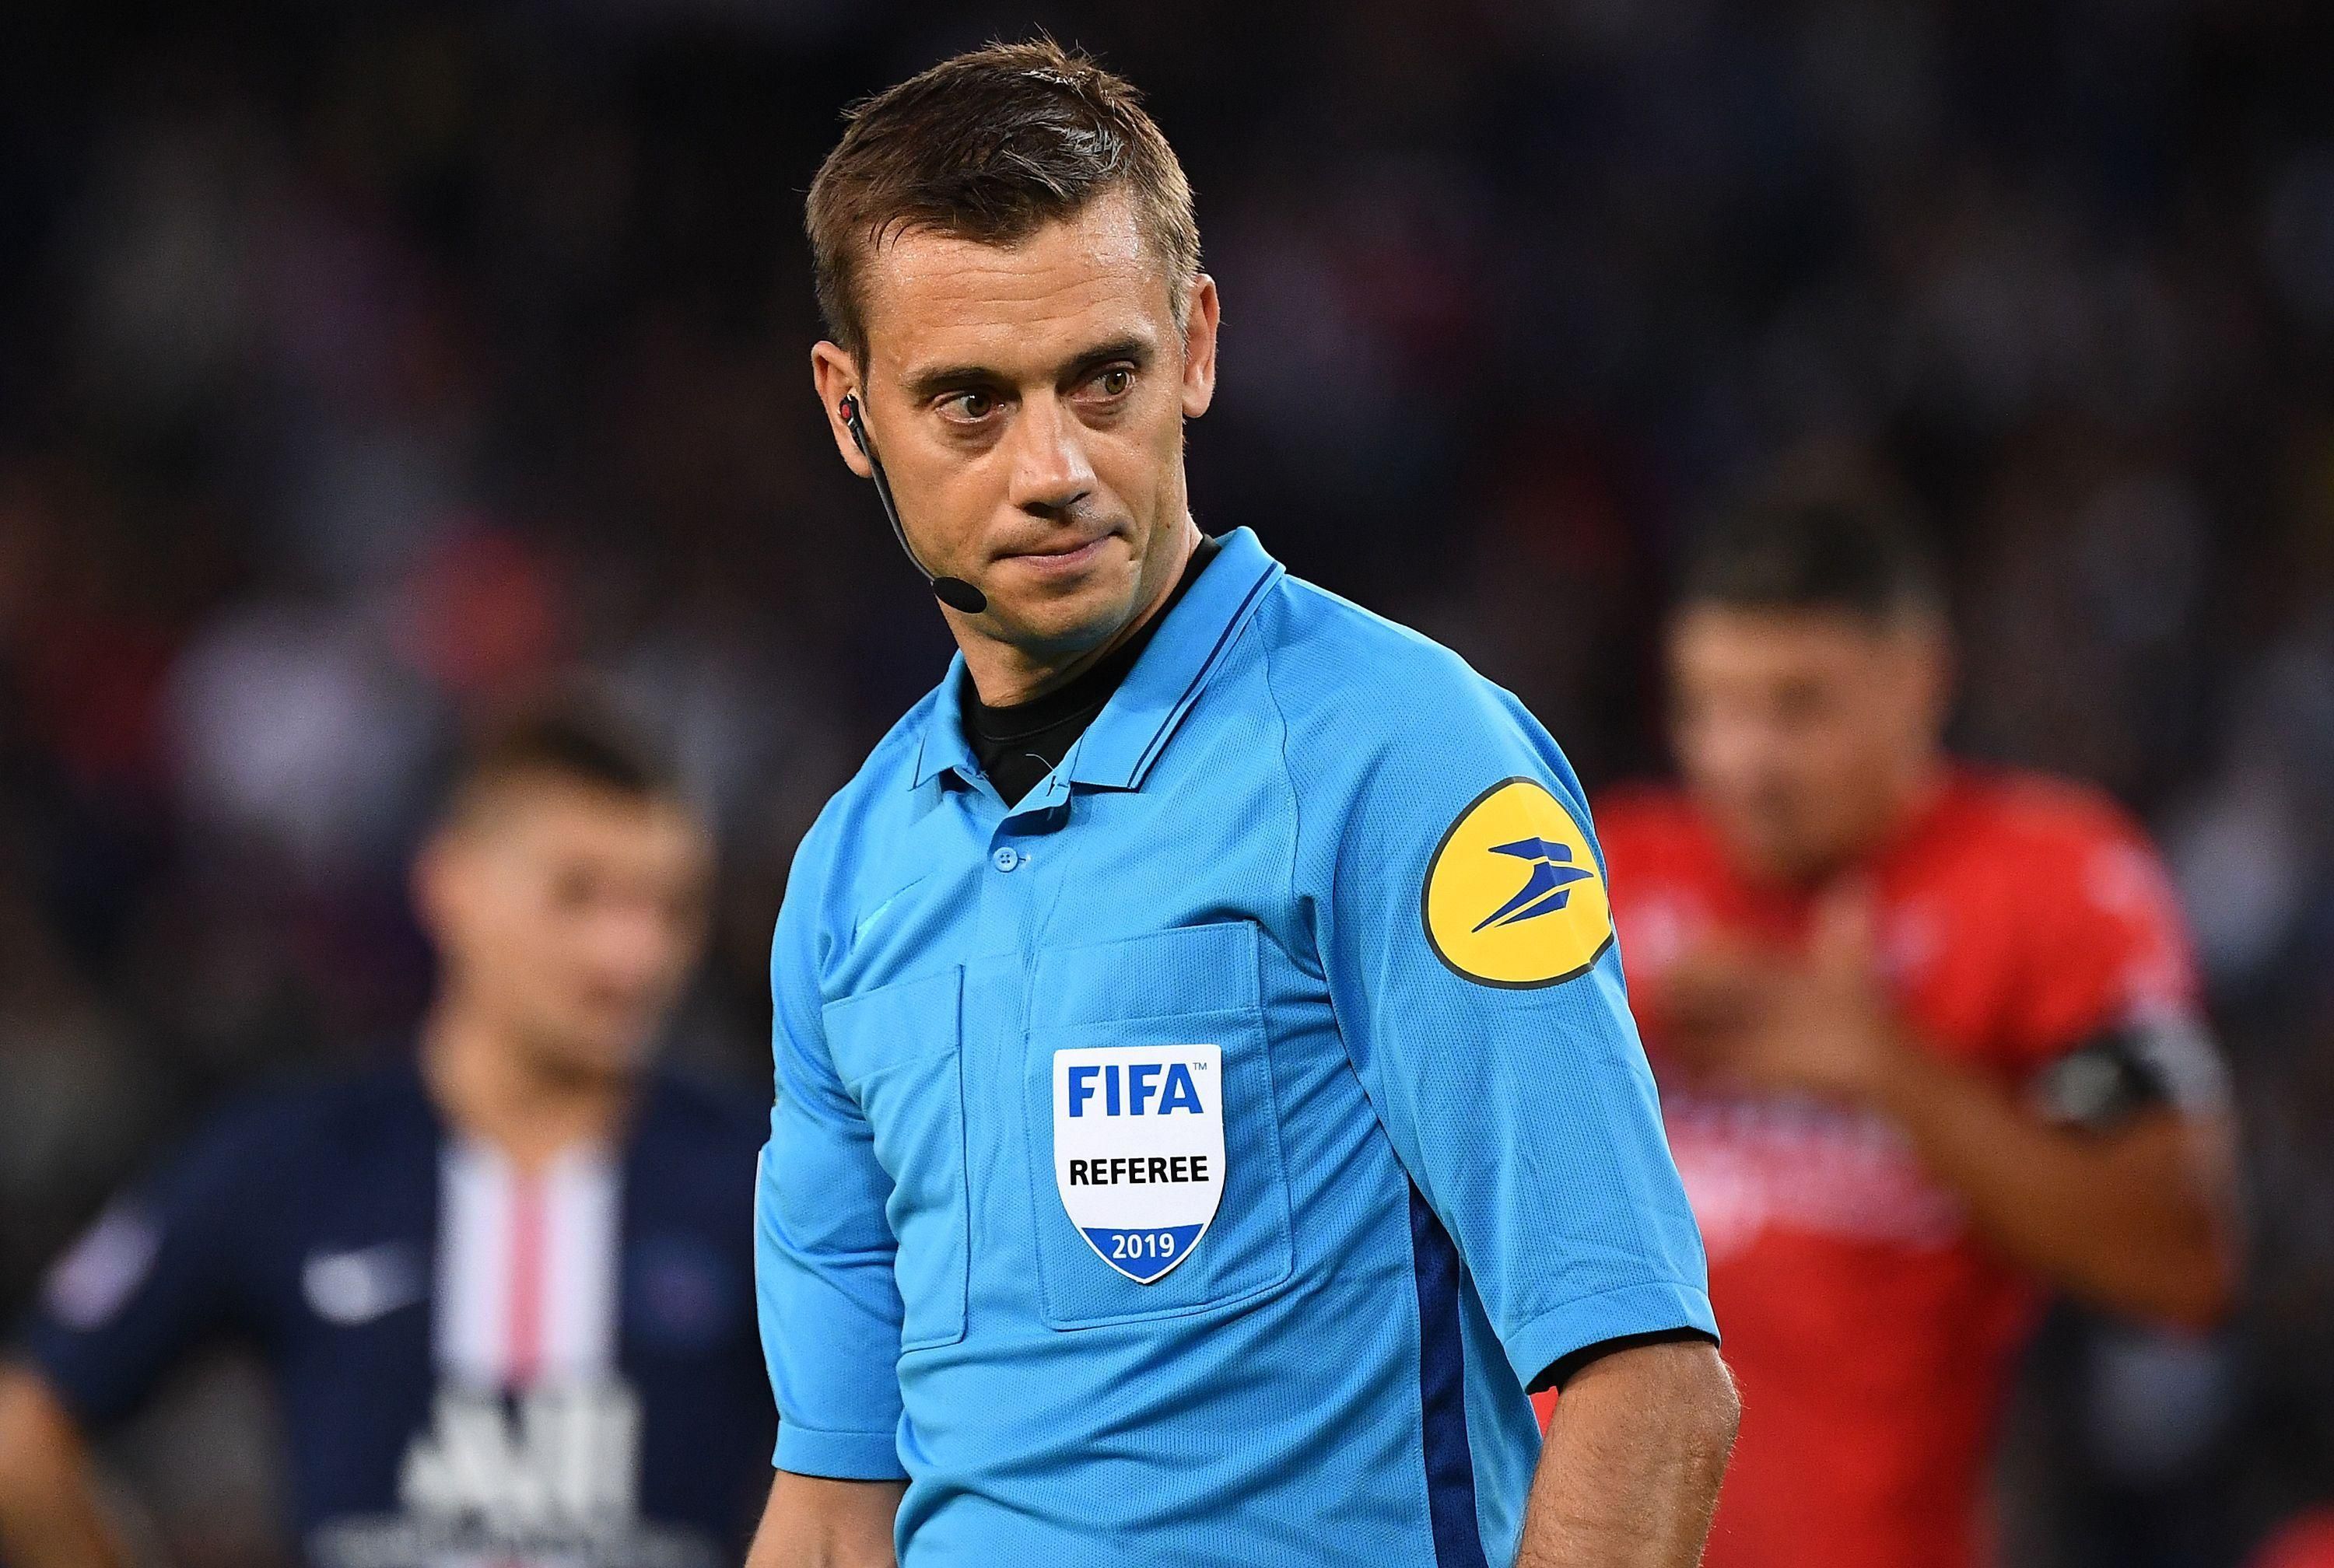 Clement Turpin – Barcelona vs Dynamo match referee